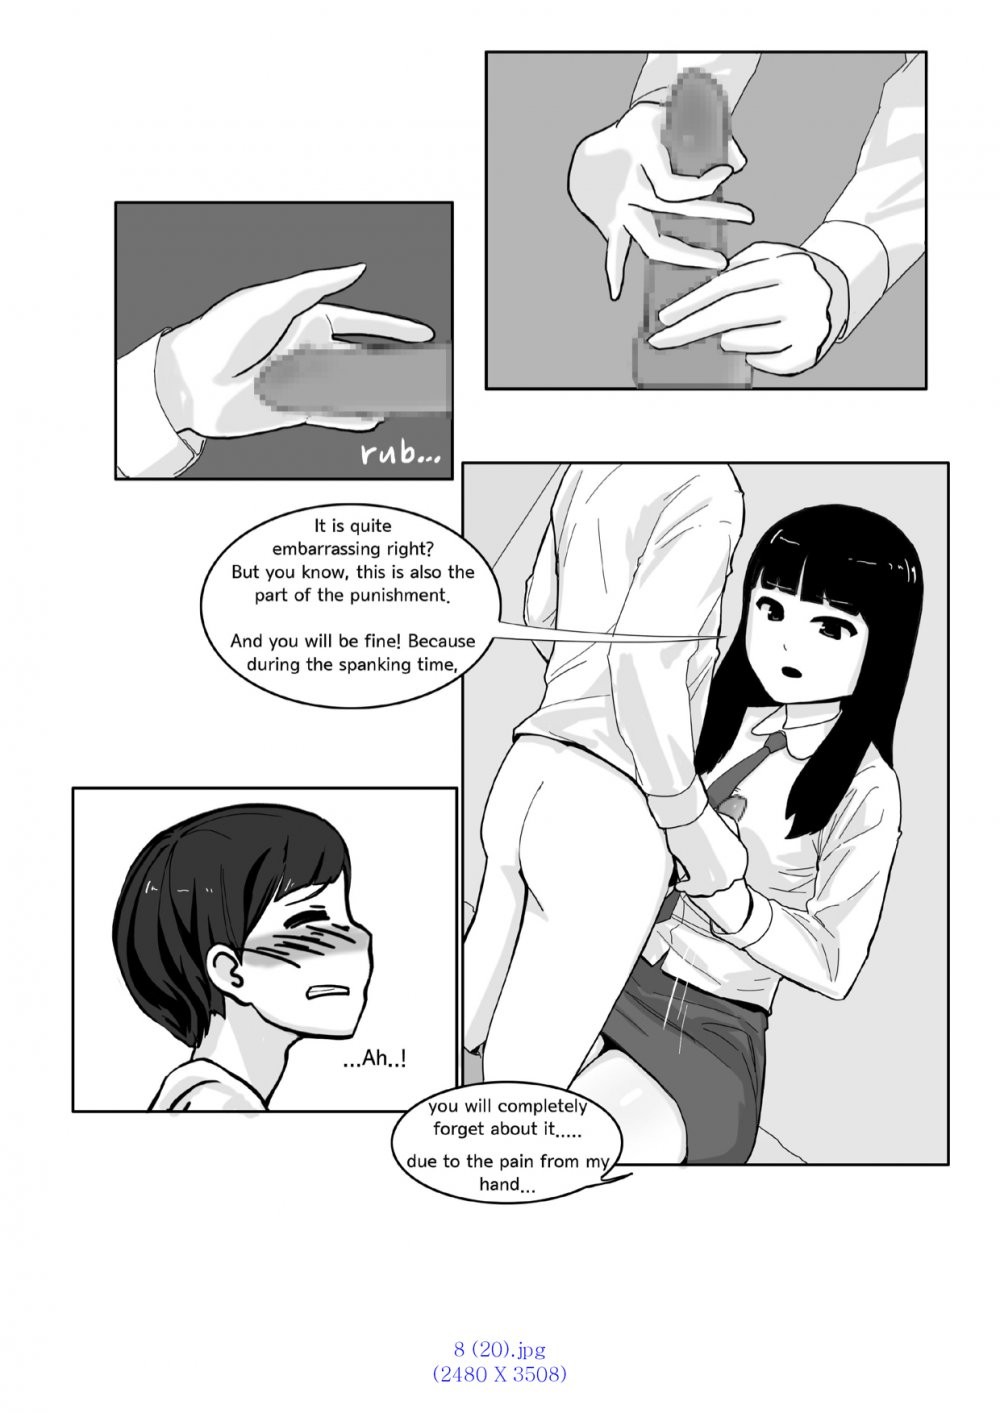 Spanking - Oshiritataki porn comic picture 38